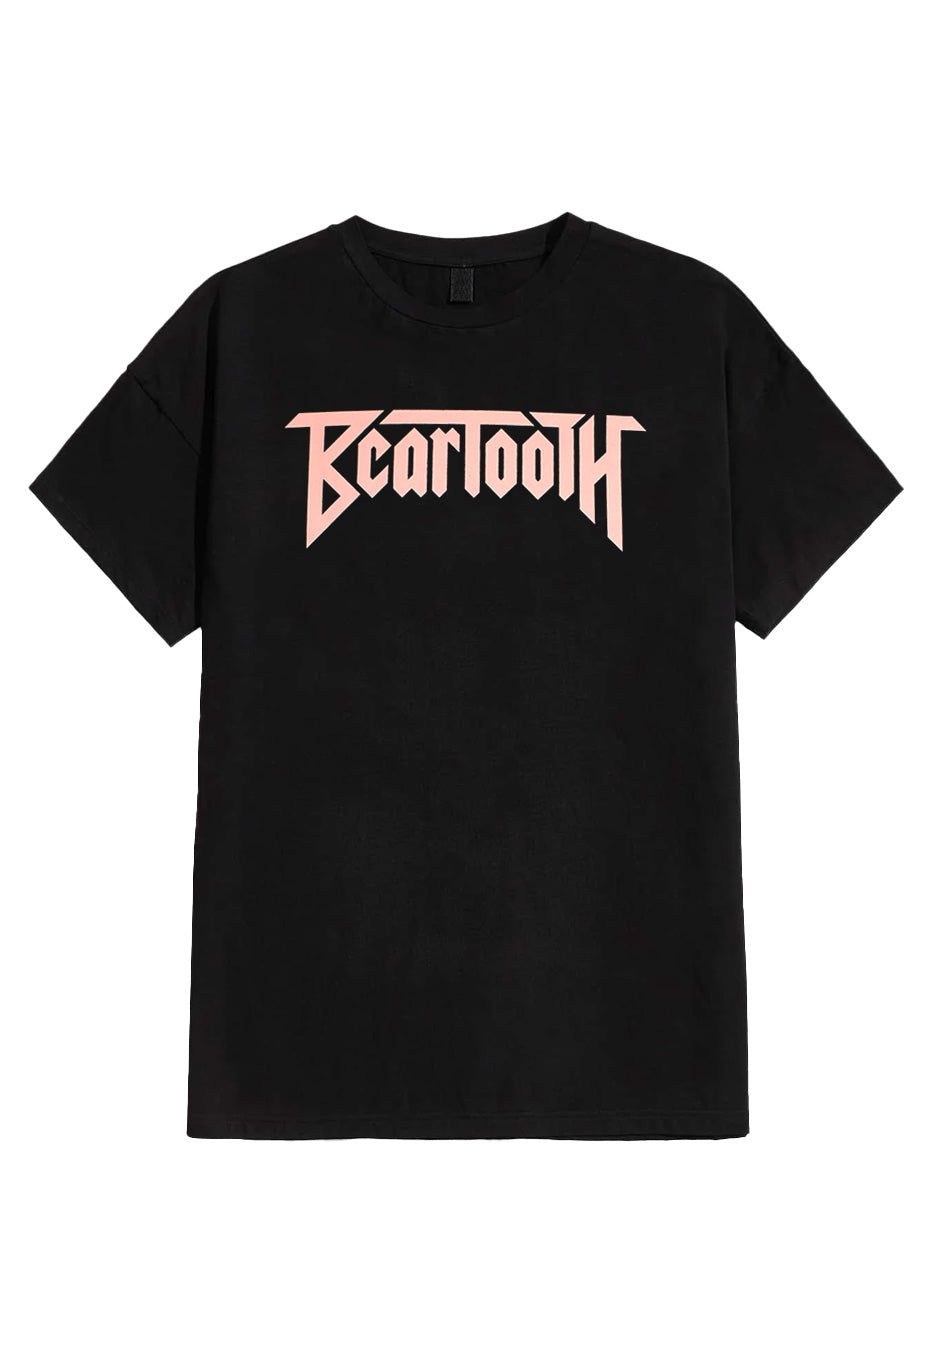 Beartooth - Pink Snake On My Back - T-Shirt